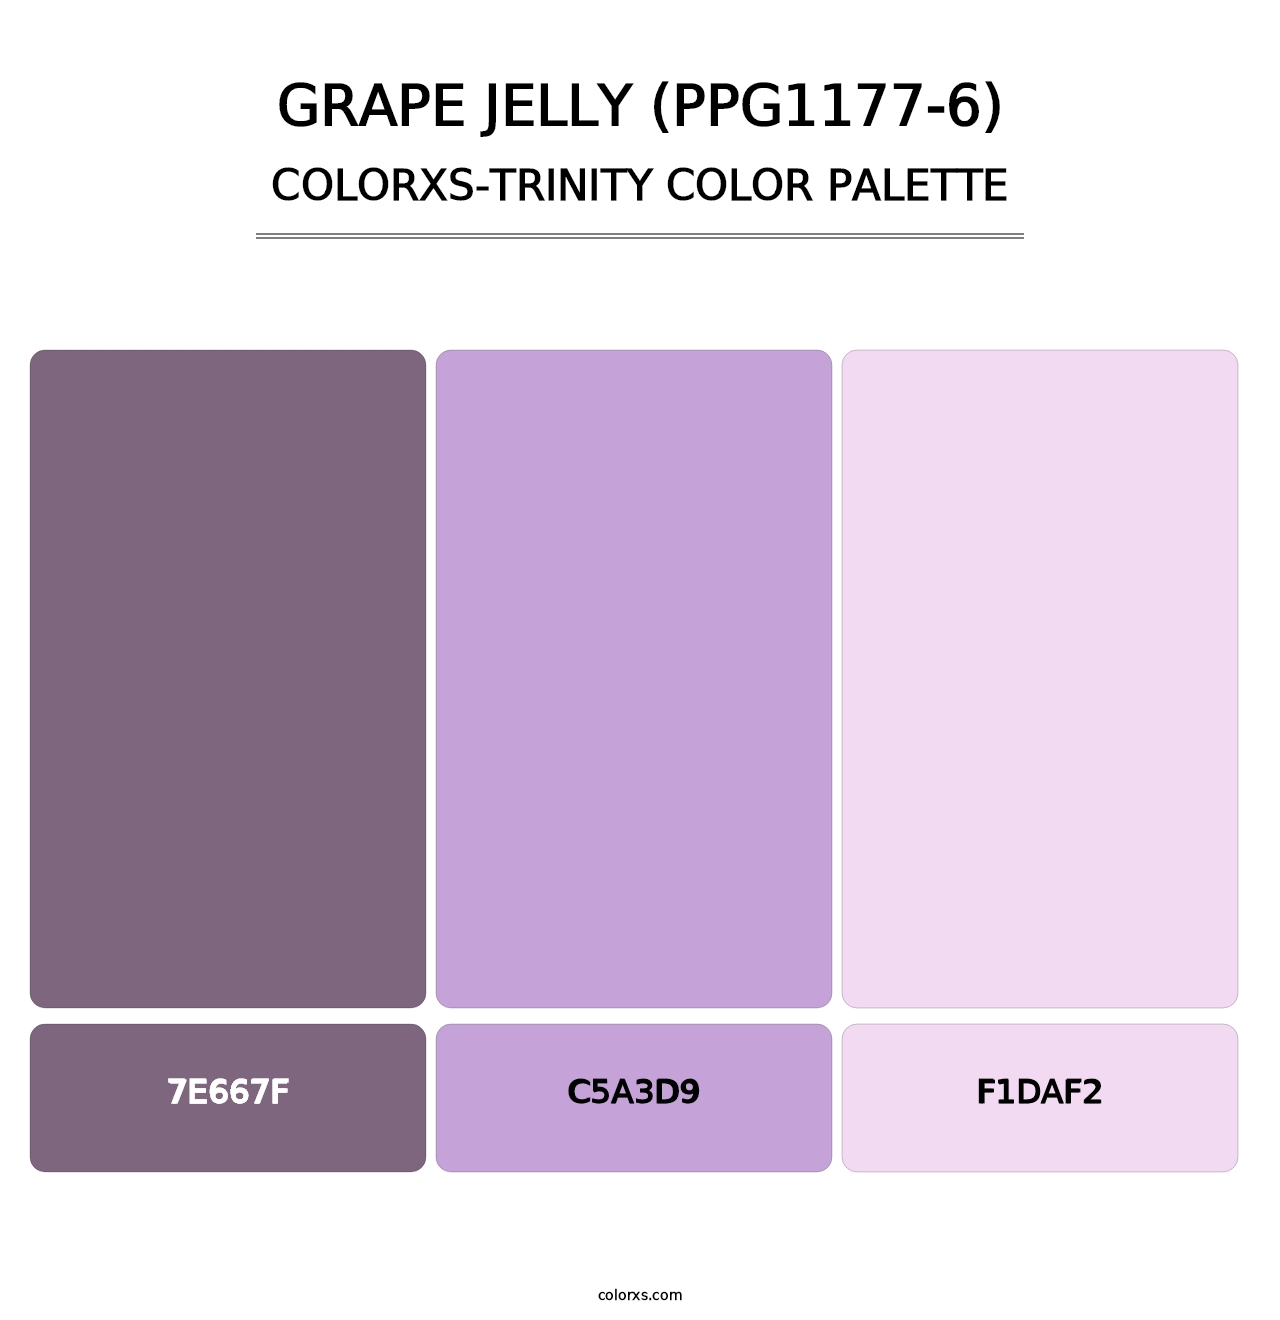 Grape Jelly (PPG1177-6) - Colorxs Trinity Palette